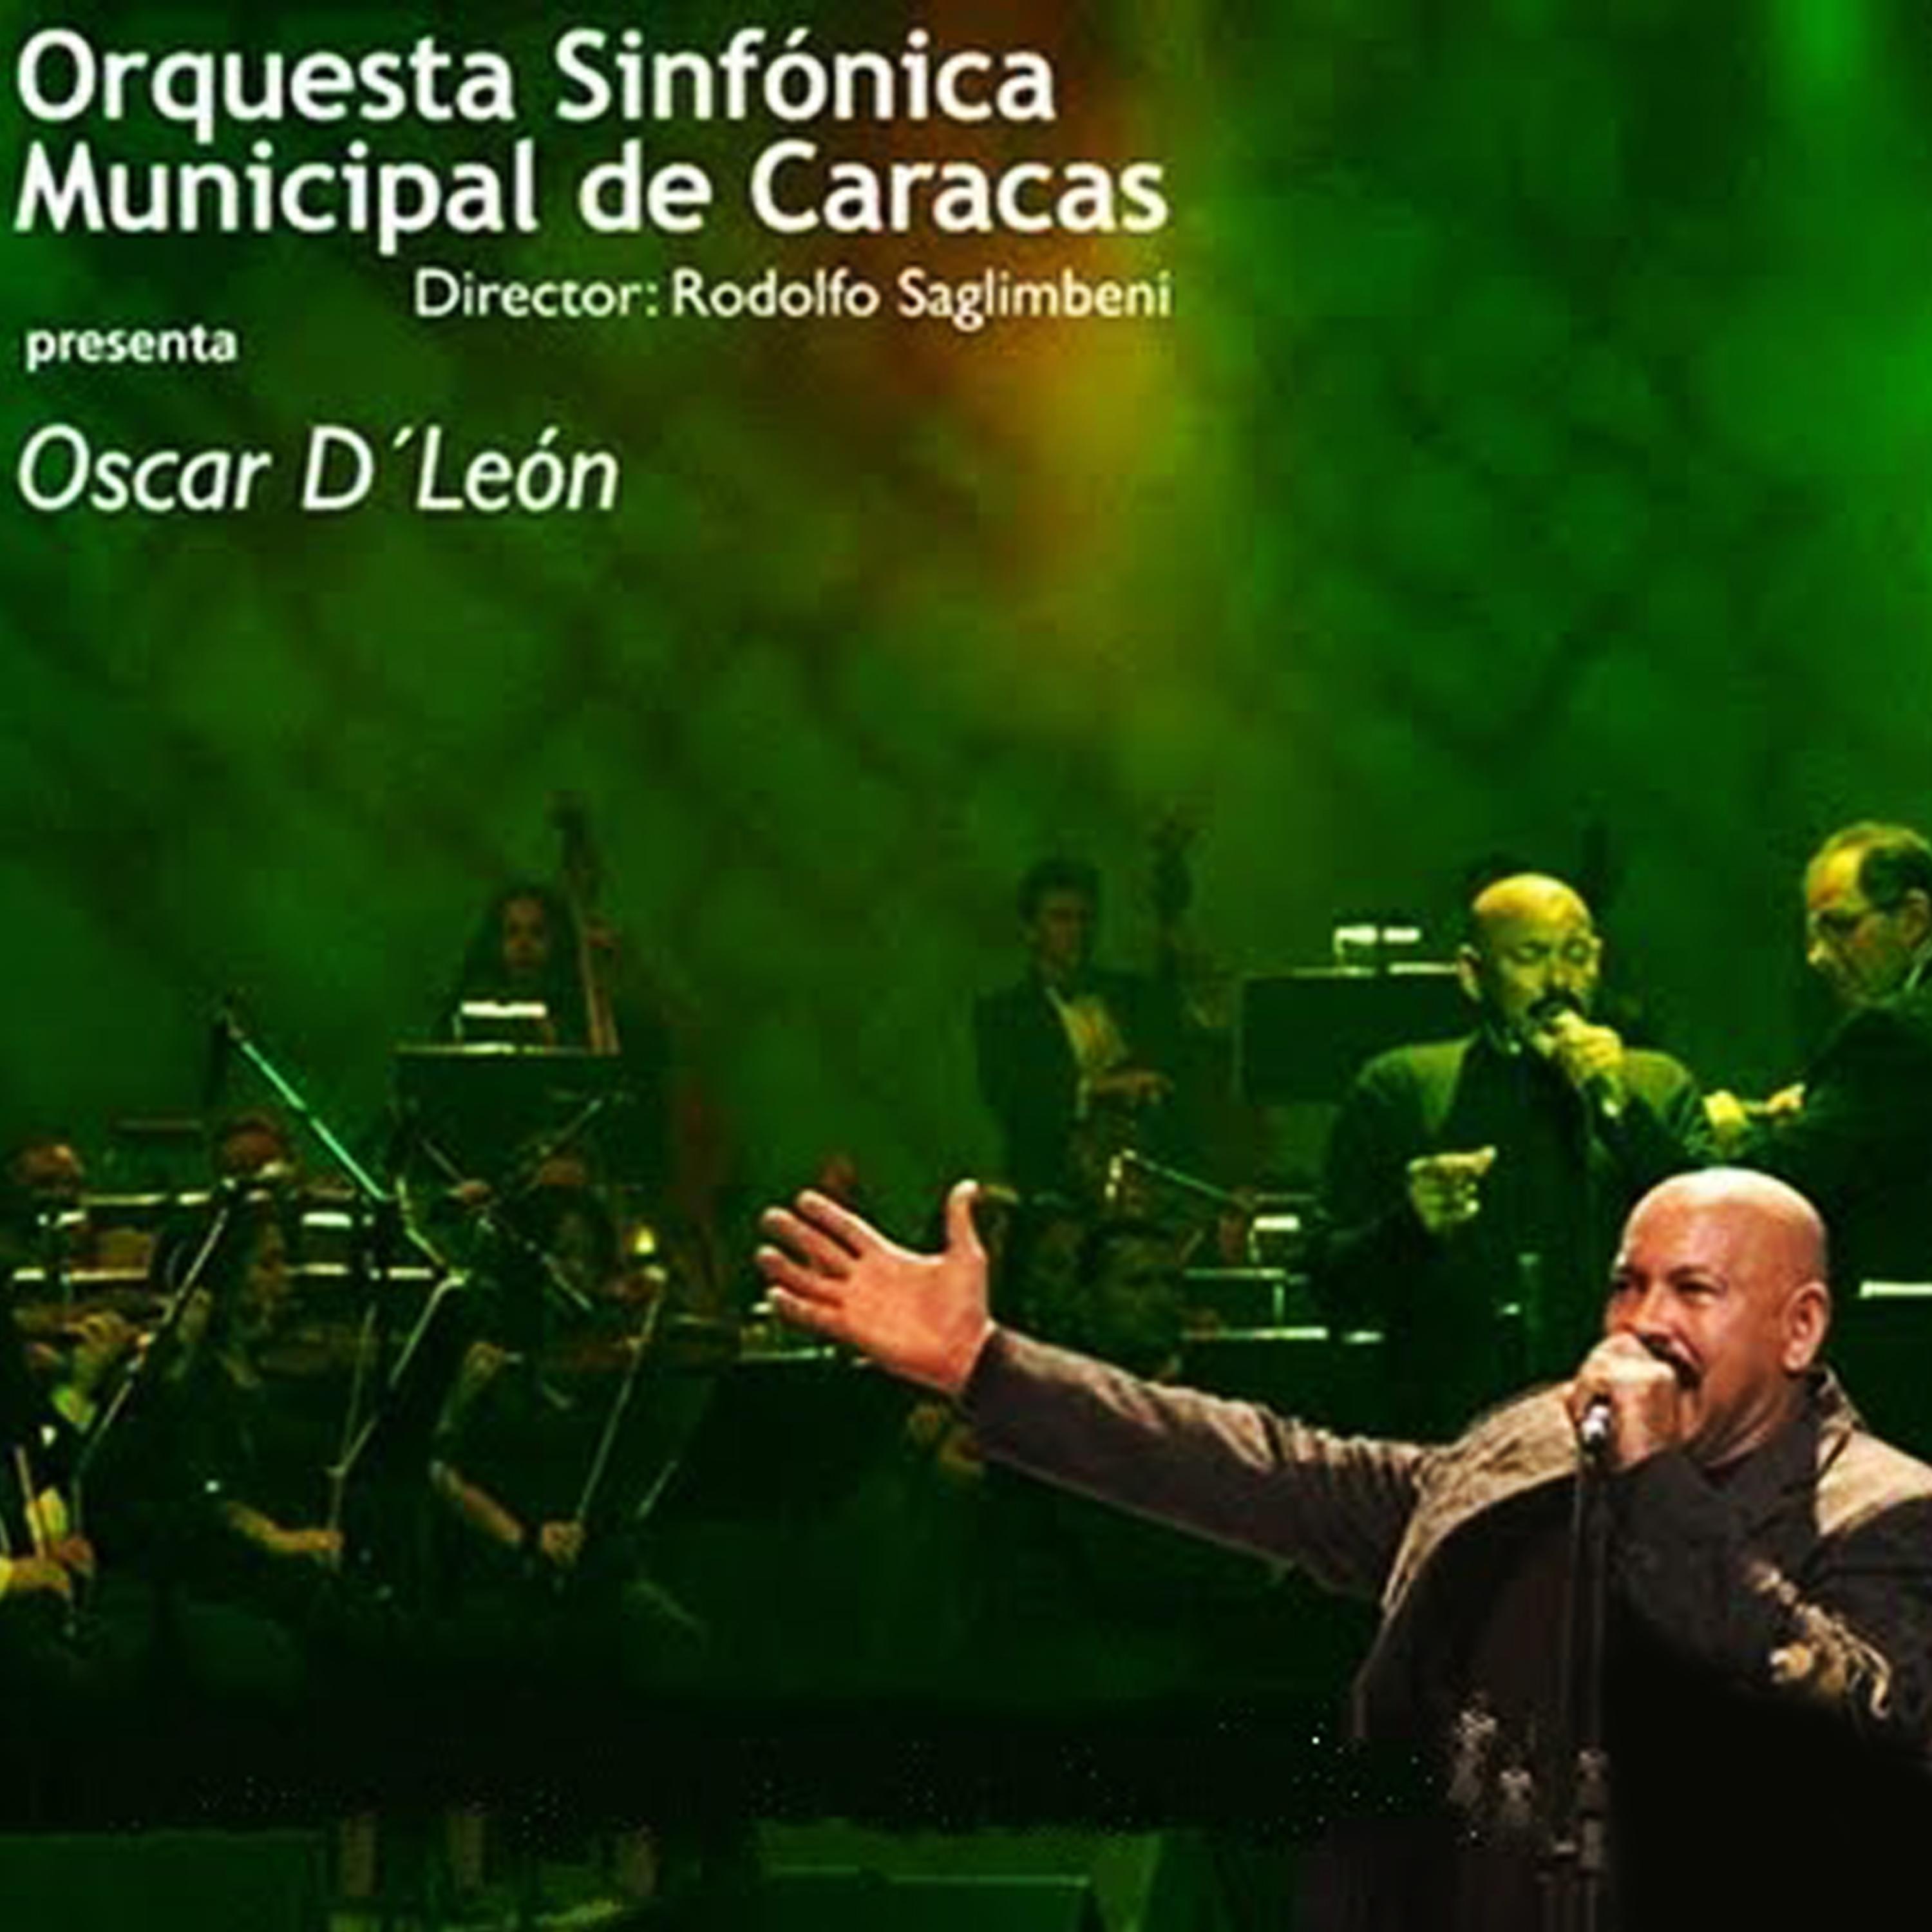 Orquesta Sinfo nica Municipal de Caracas Presenta Oscar D' Leo n